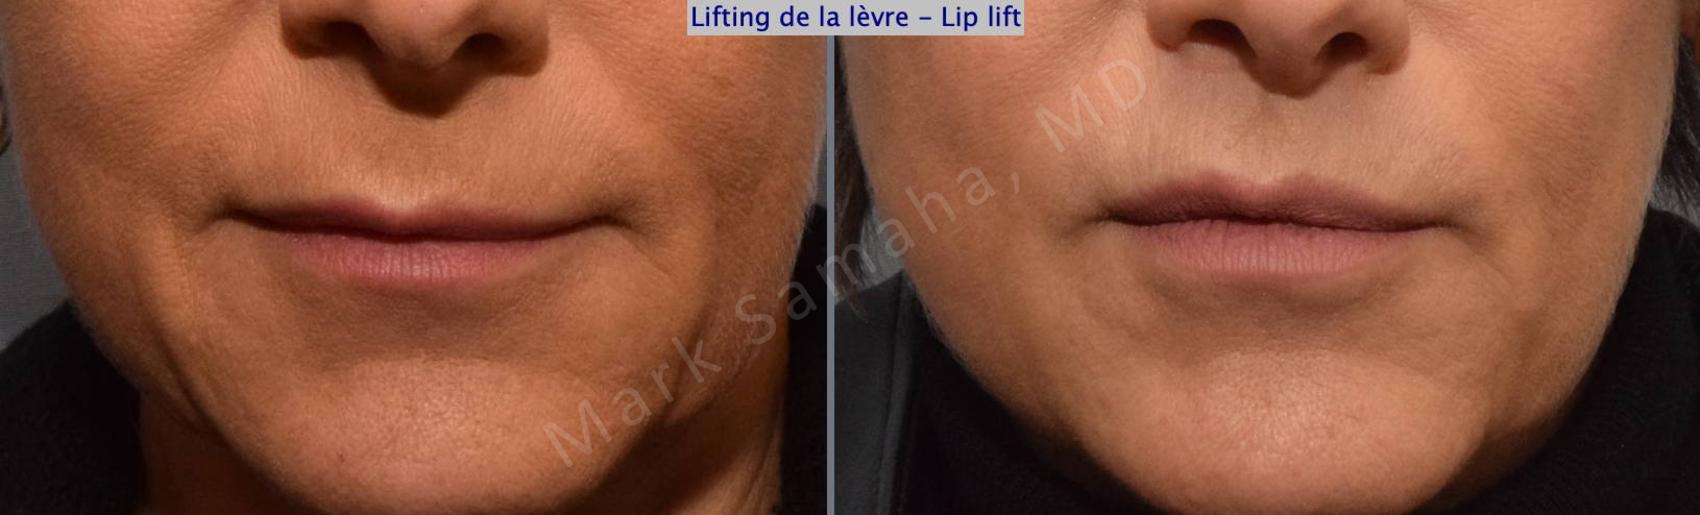 Before & After Lifting de la lèvre supérieure / Lip Lift  Case 124 View #1 View in Montreal, QC